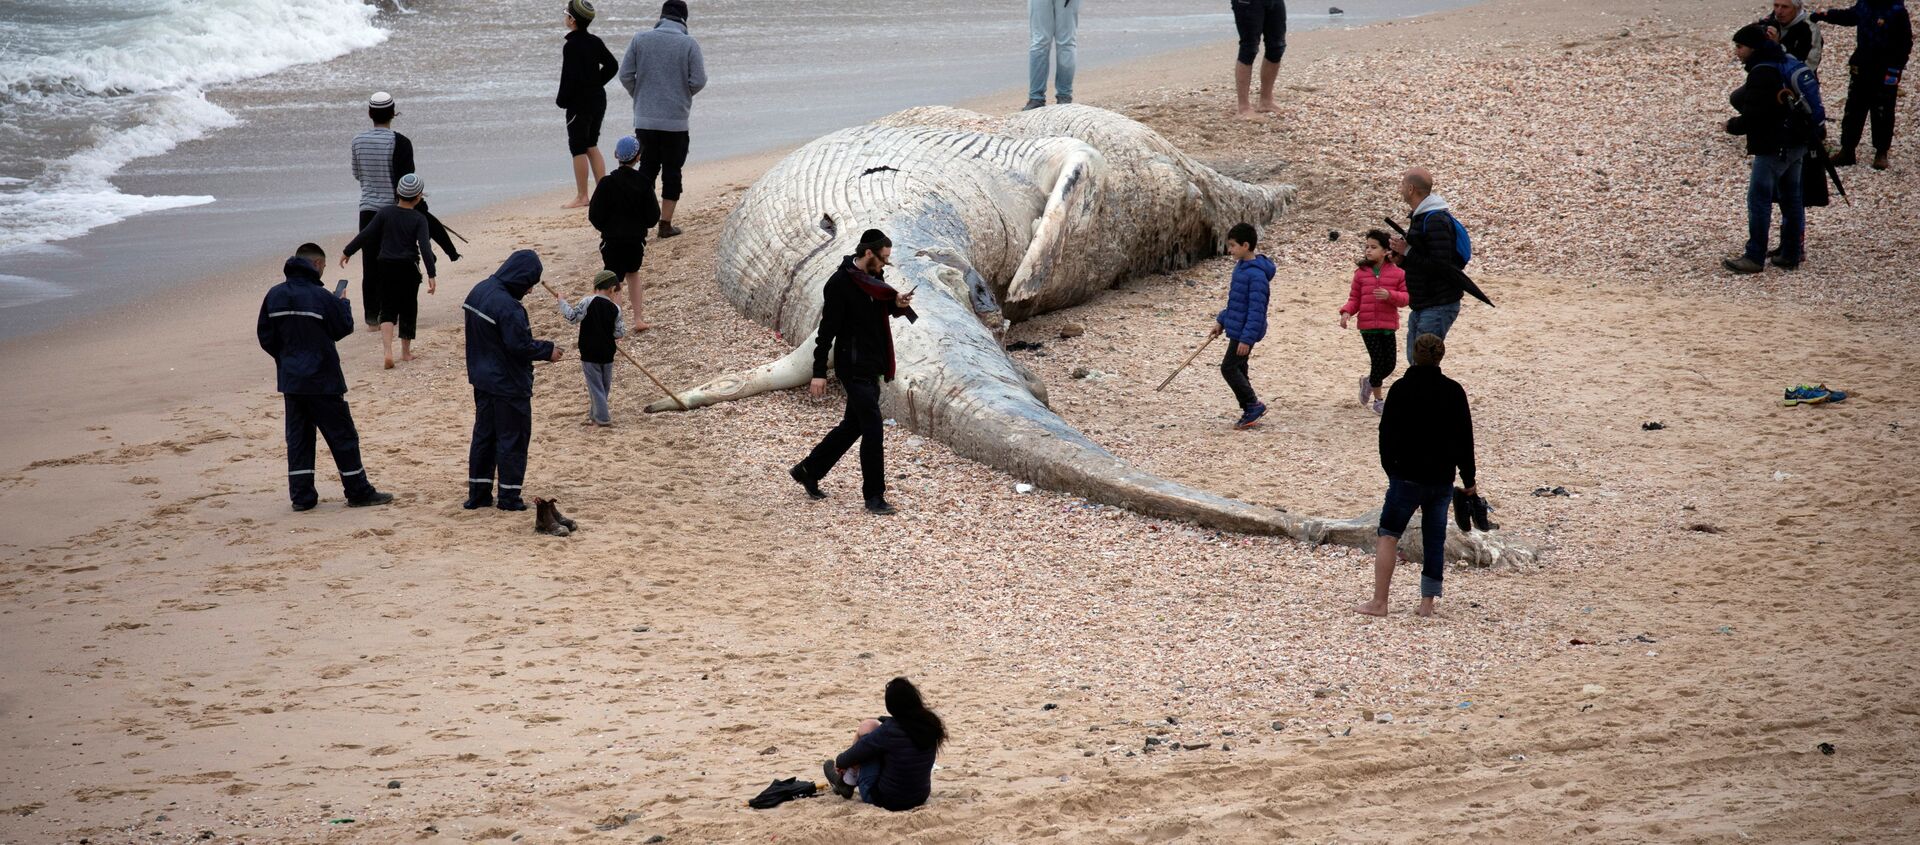 Люди стоят возле тела мертвого кита на берегу Средиземного моря в Израиле - Sputnik Беларусь, 1920, 22.02.2021